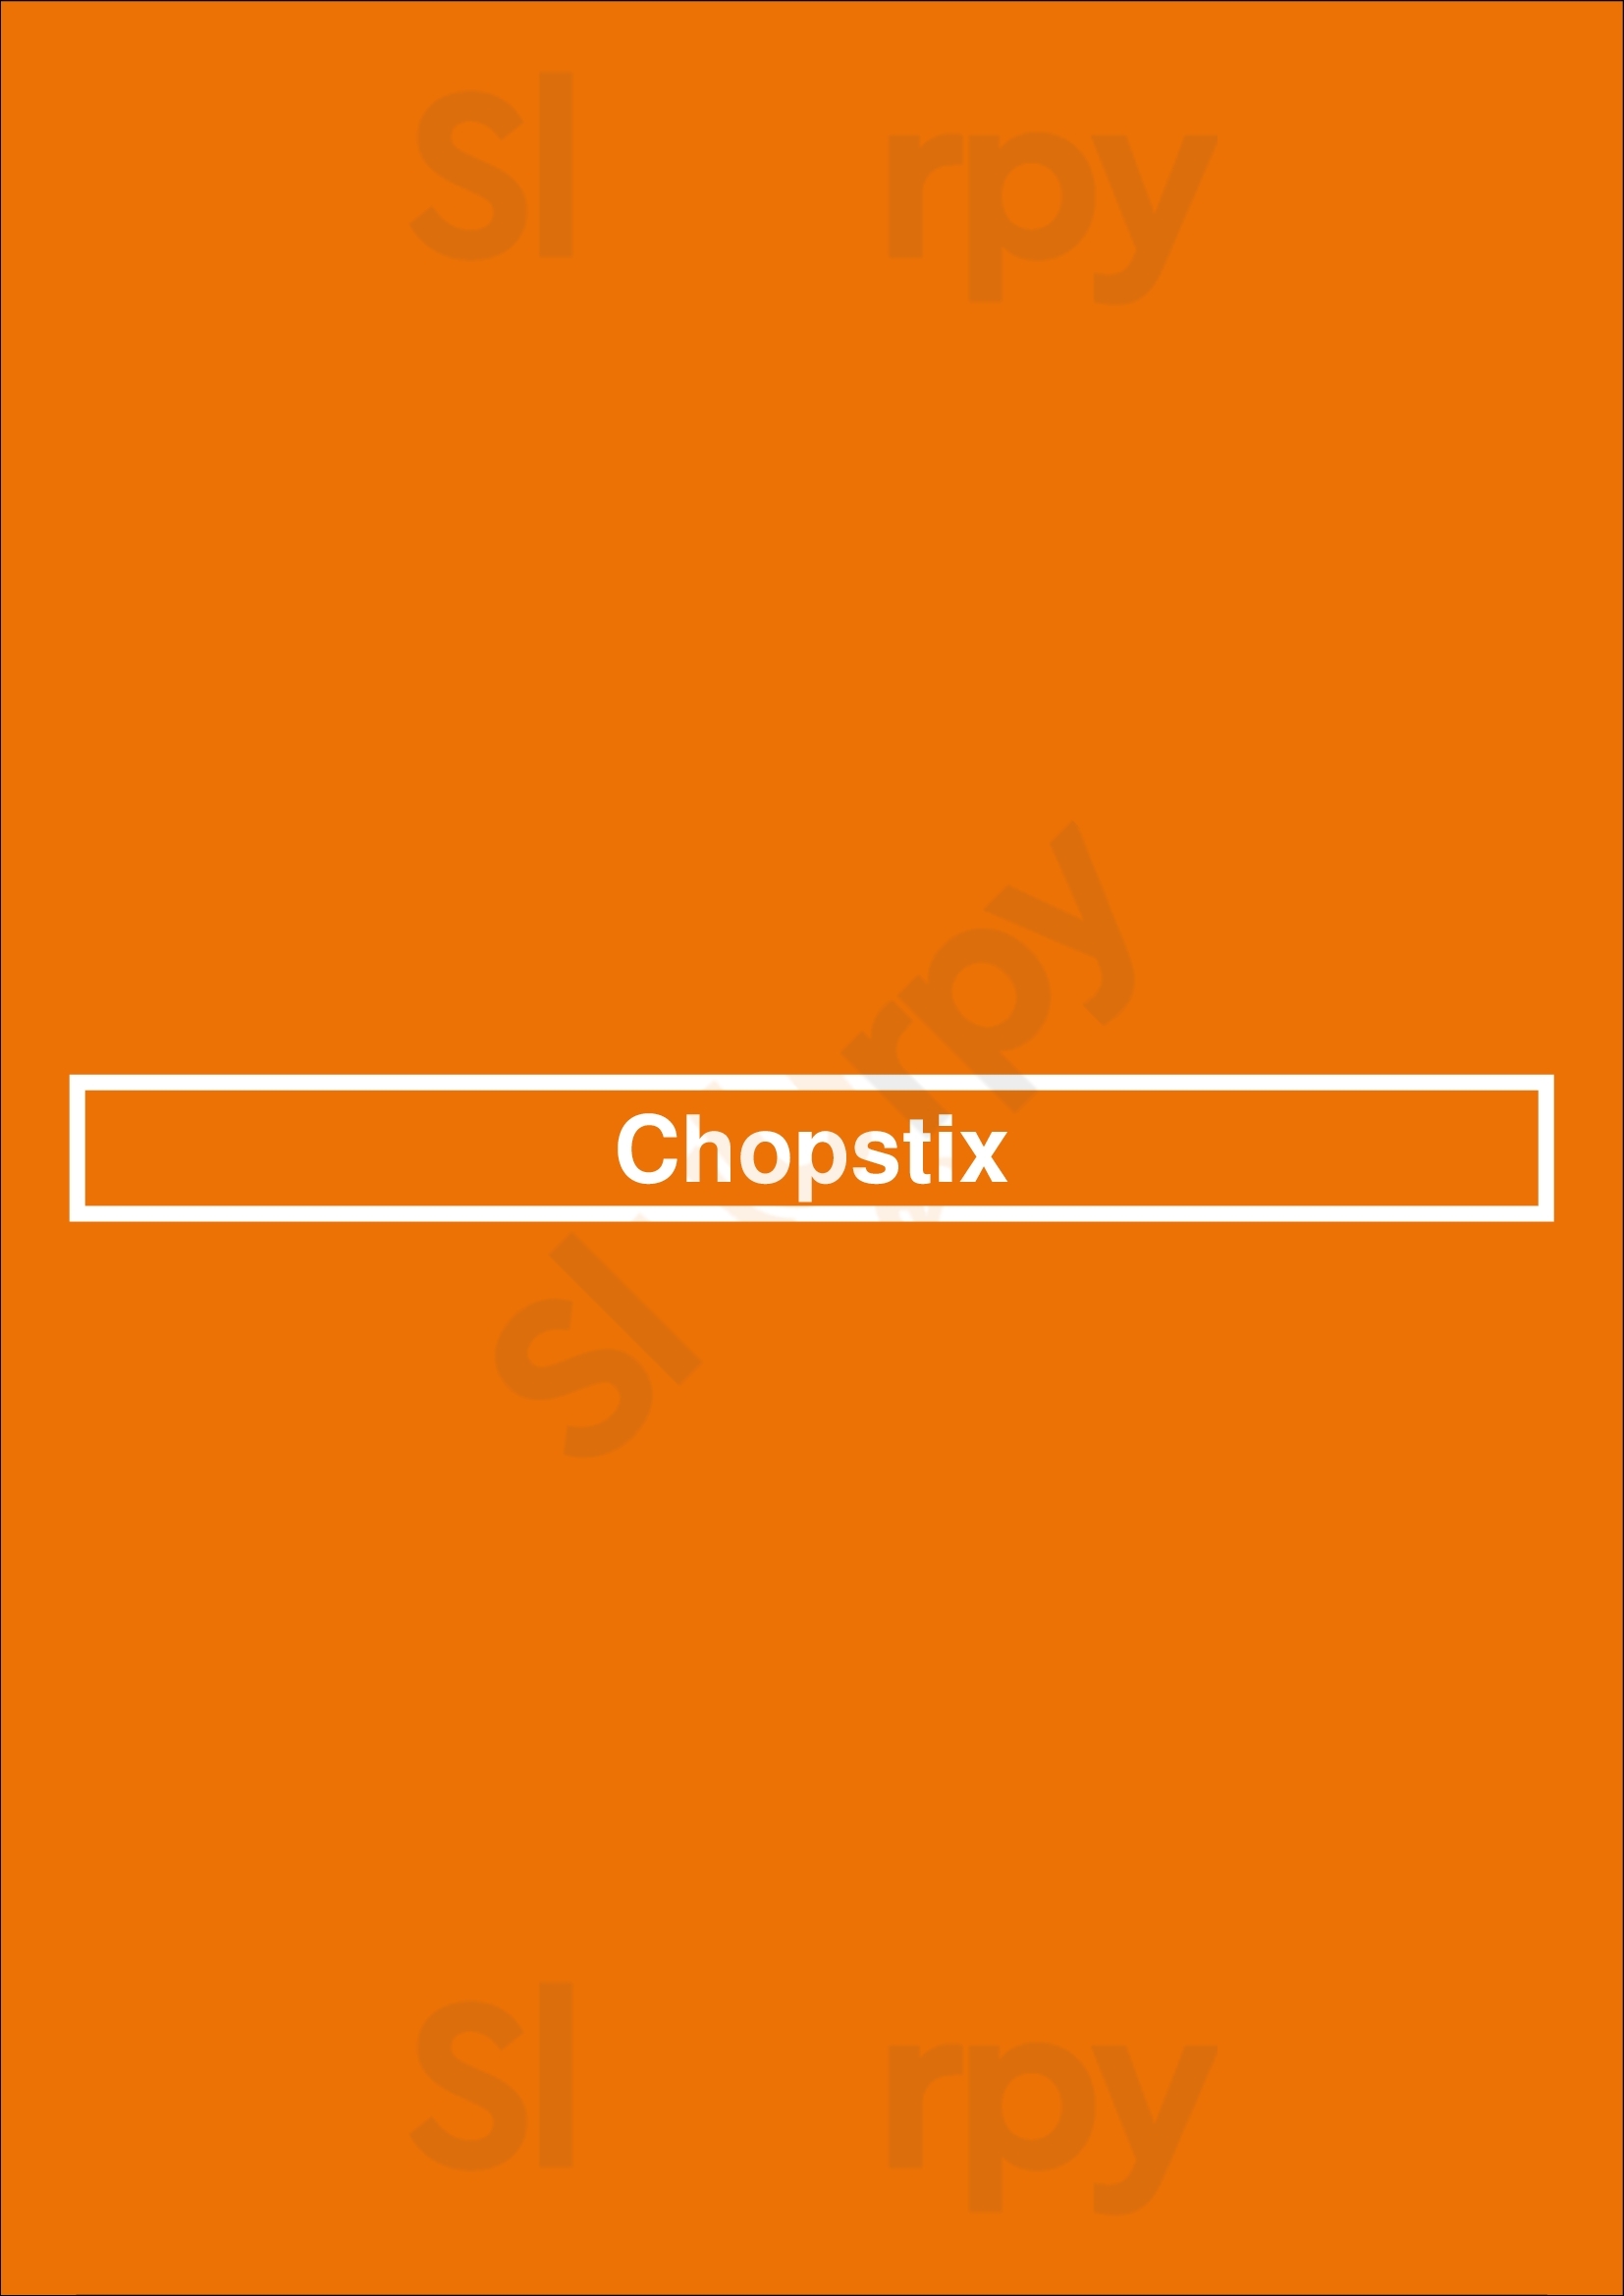 Chopstix Daly City Menu - 1